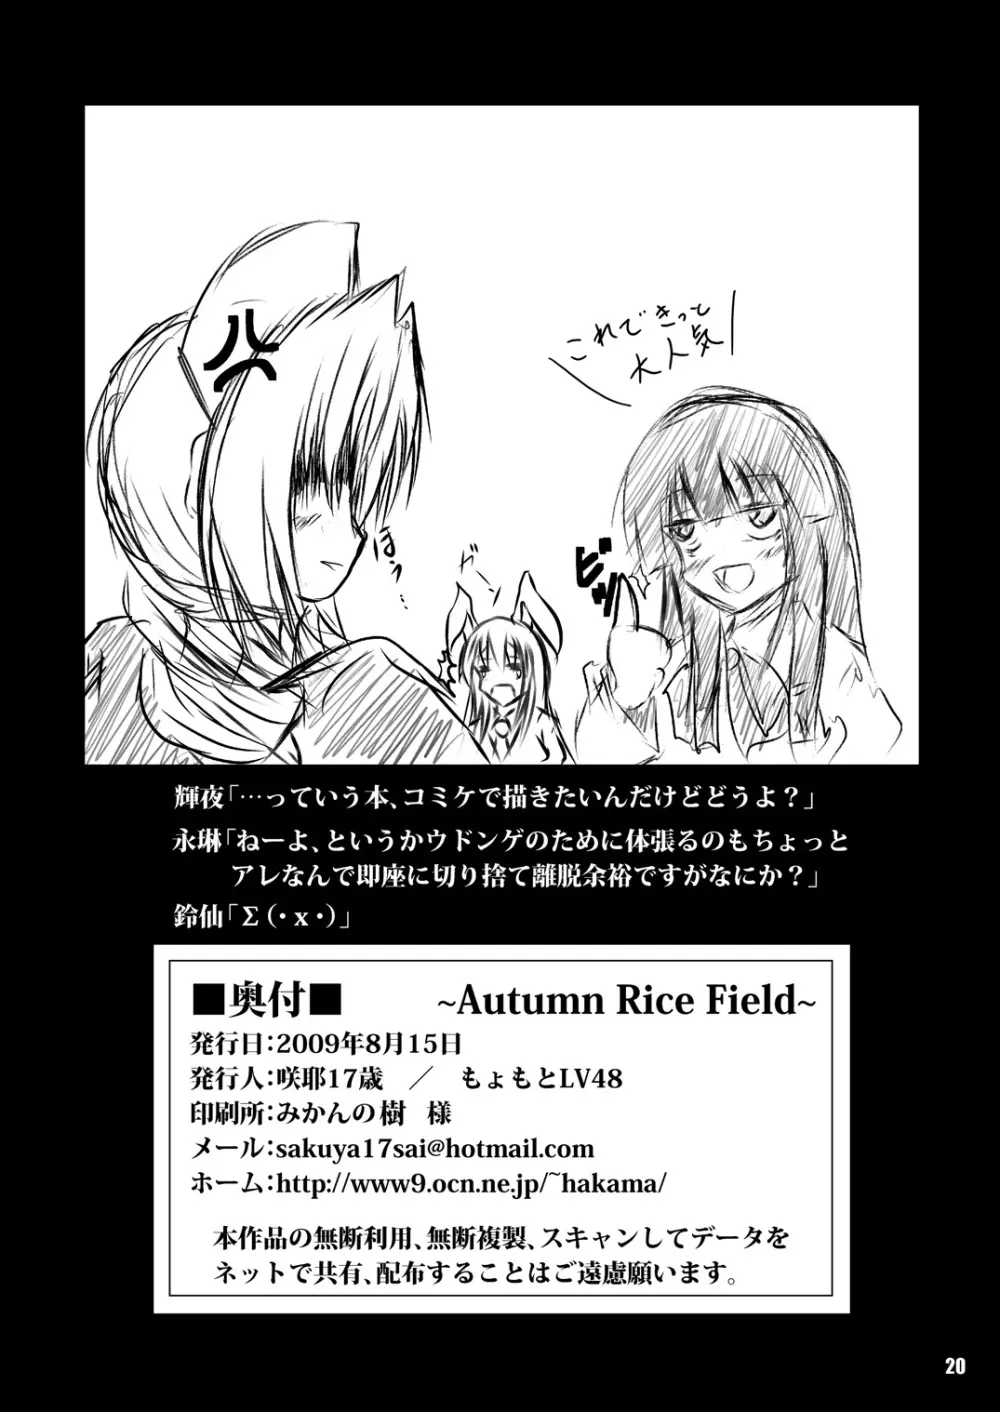 Autumn Rice Field - page21